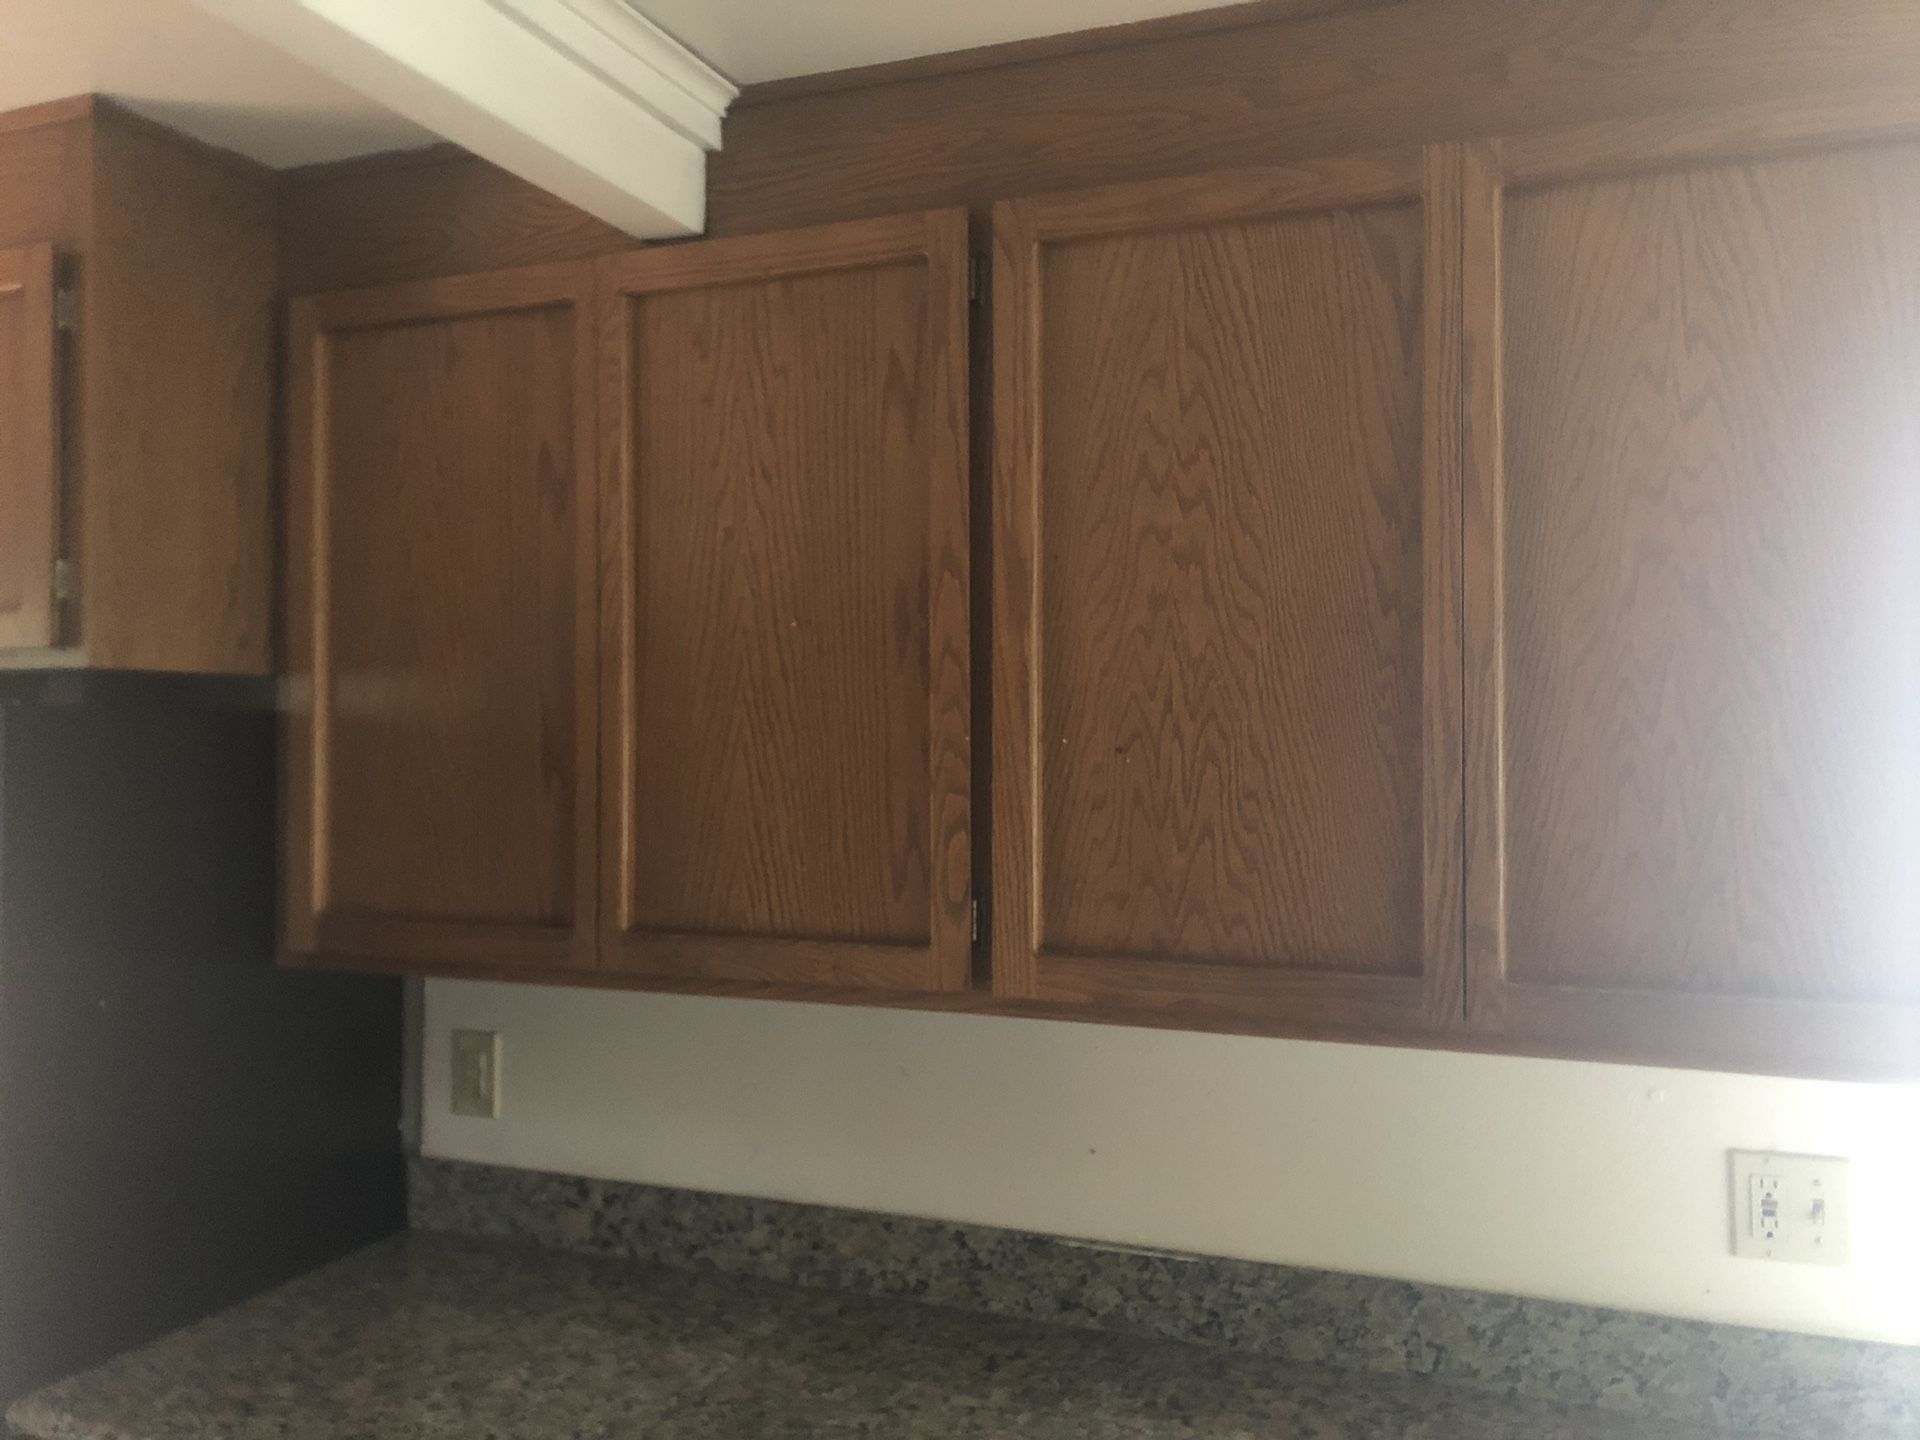 Oak kitchen cabinets with granite countertops